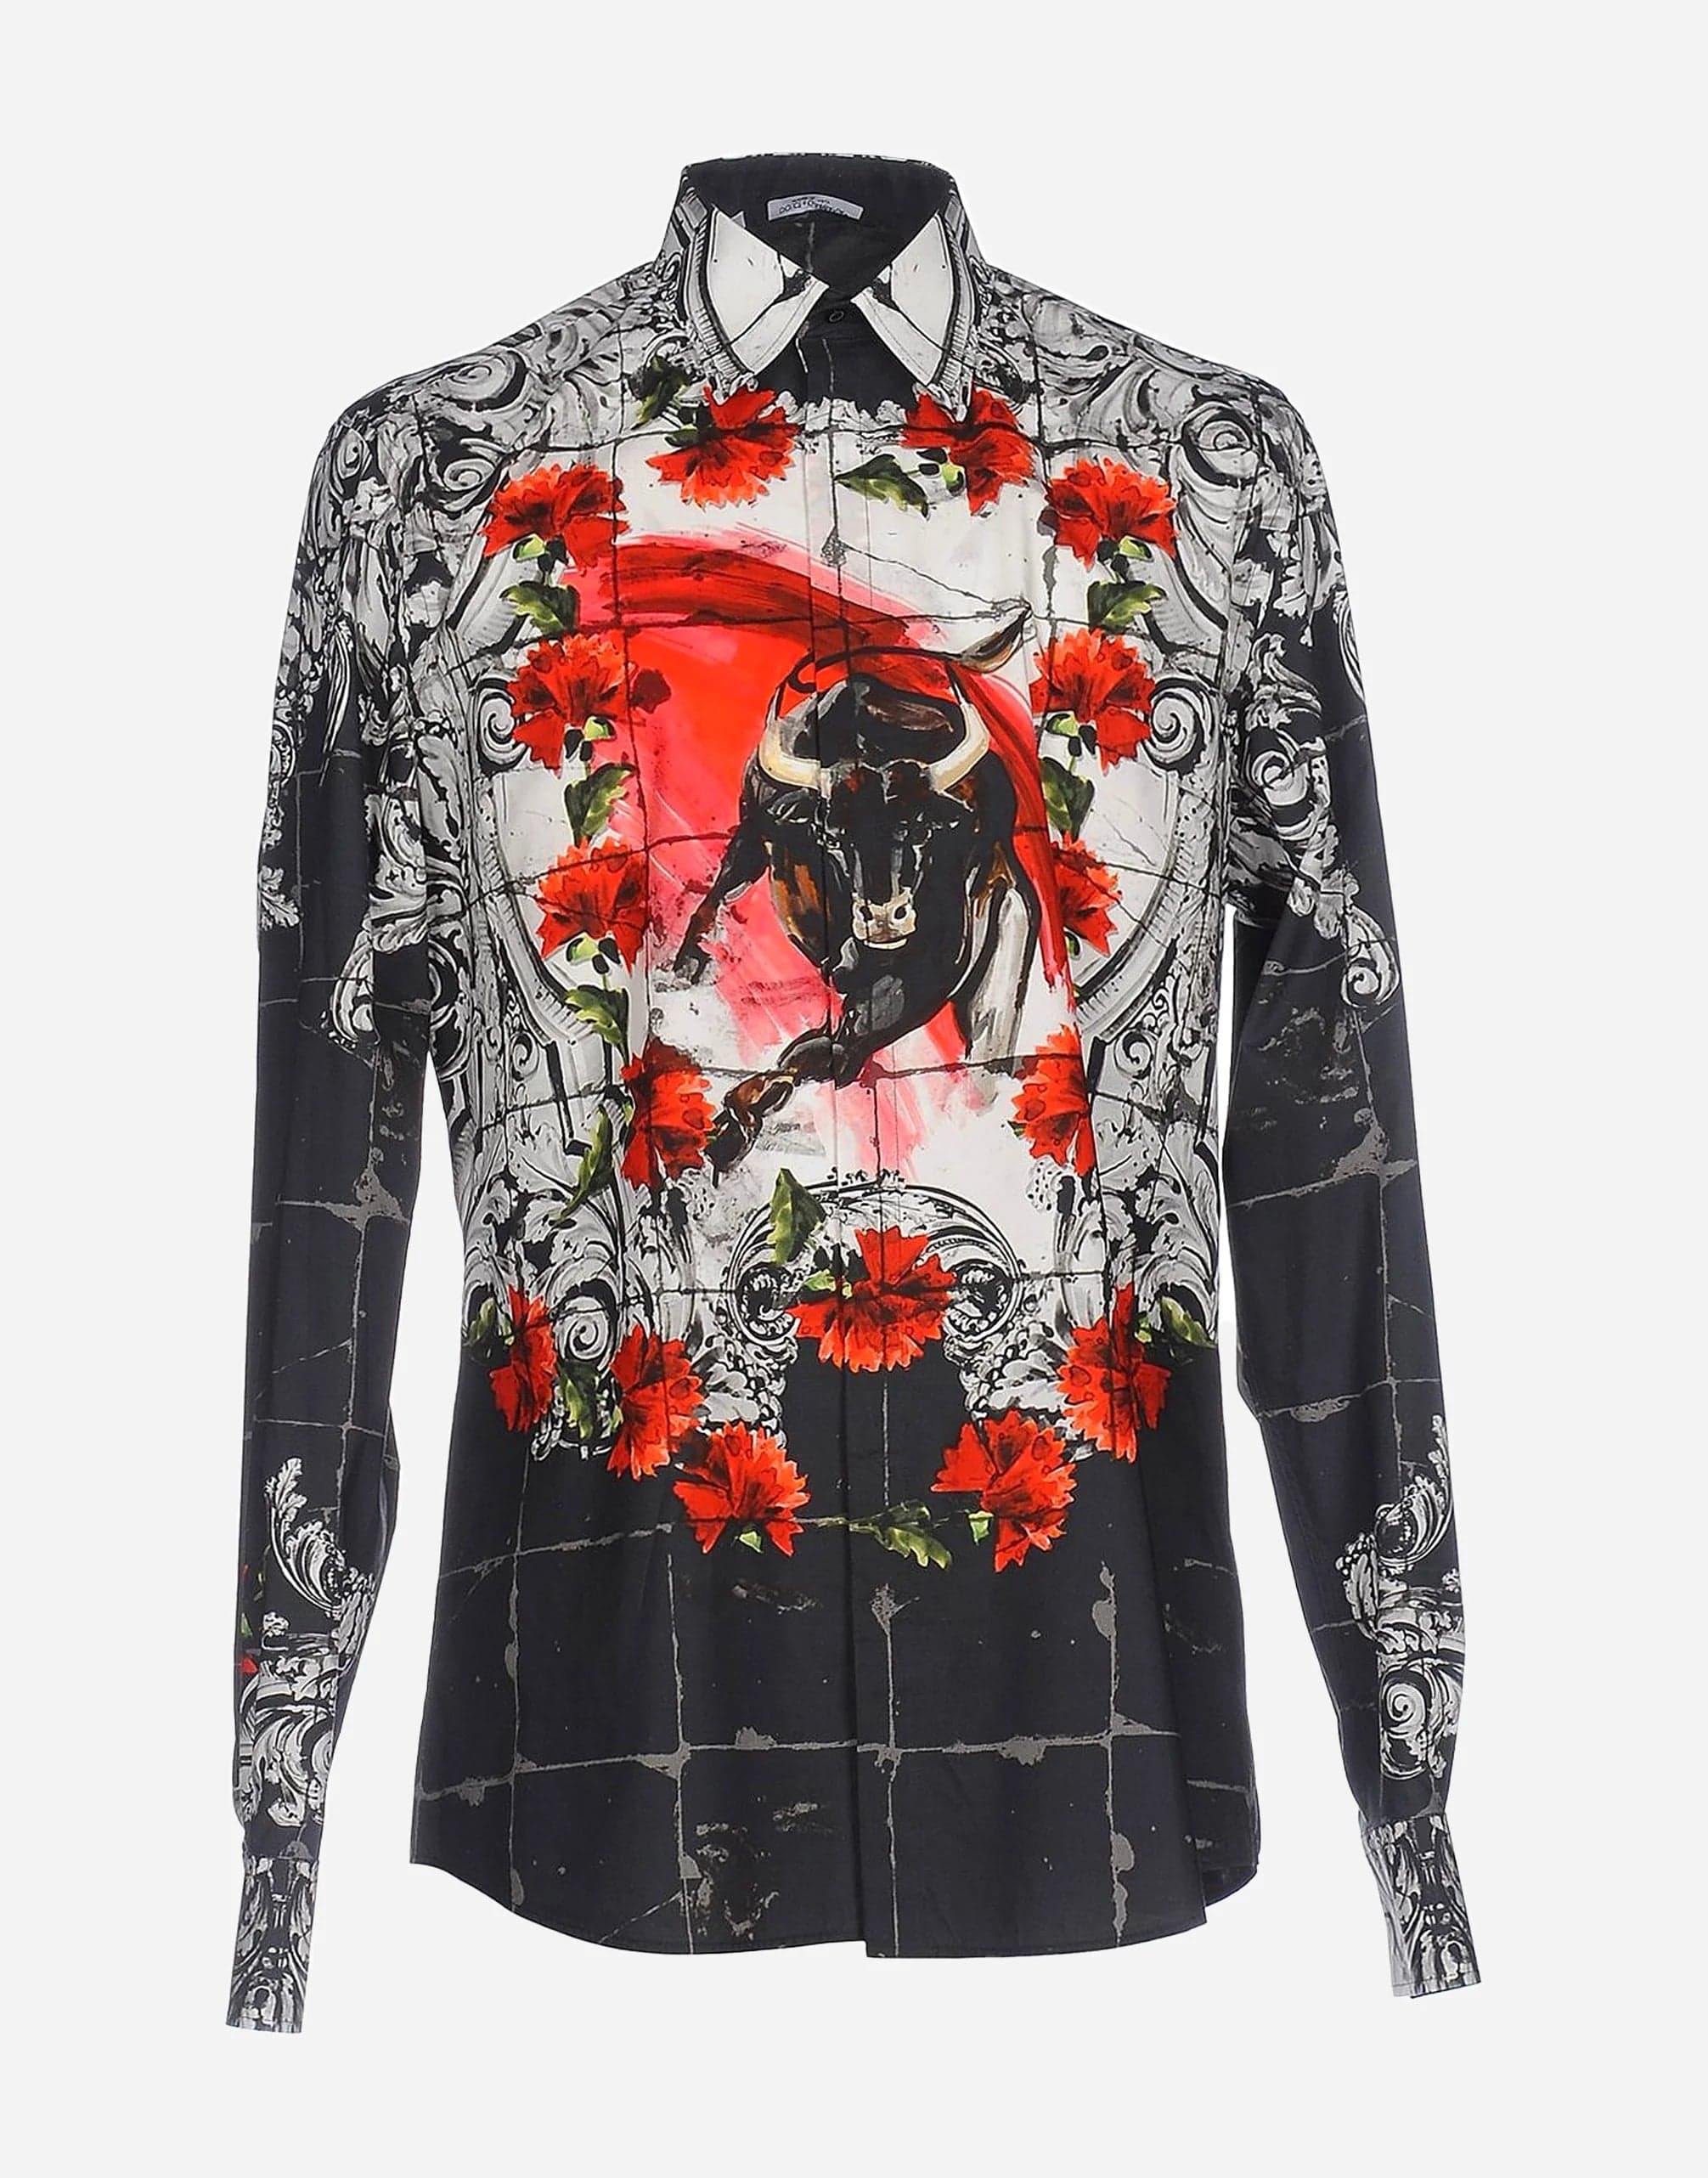 Dolce & Gabbana Floral Bull Print Shirt